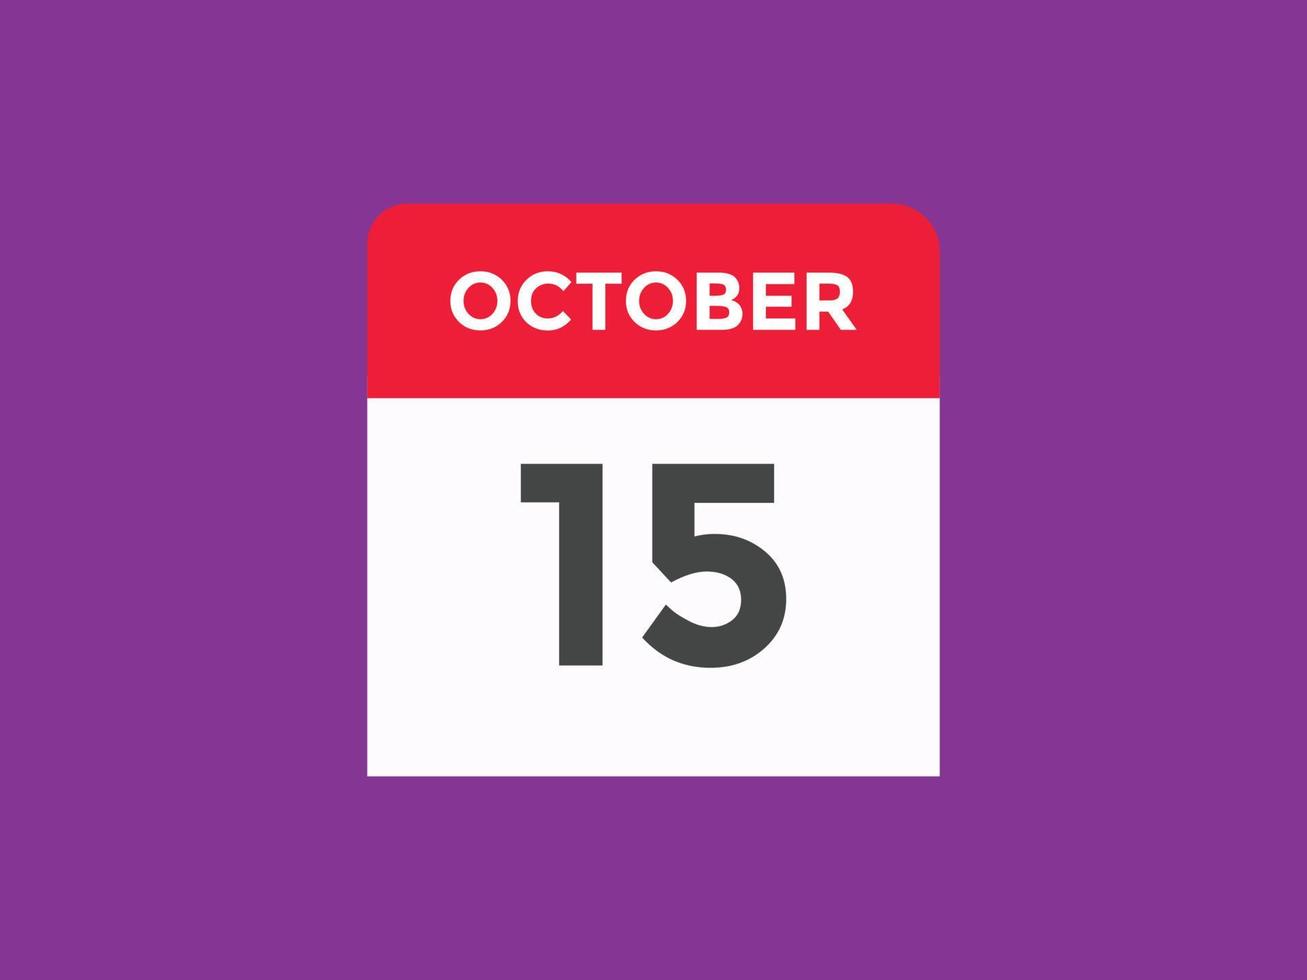 october 15 calendar reminder. 15th october daily calendar icon template. Calendar 15th october icon Design template. Vector illustration